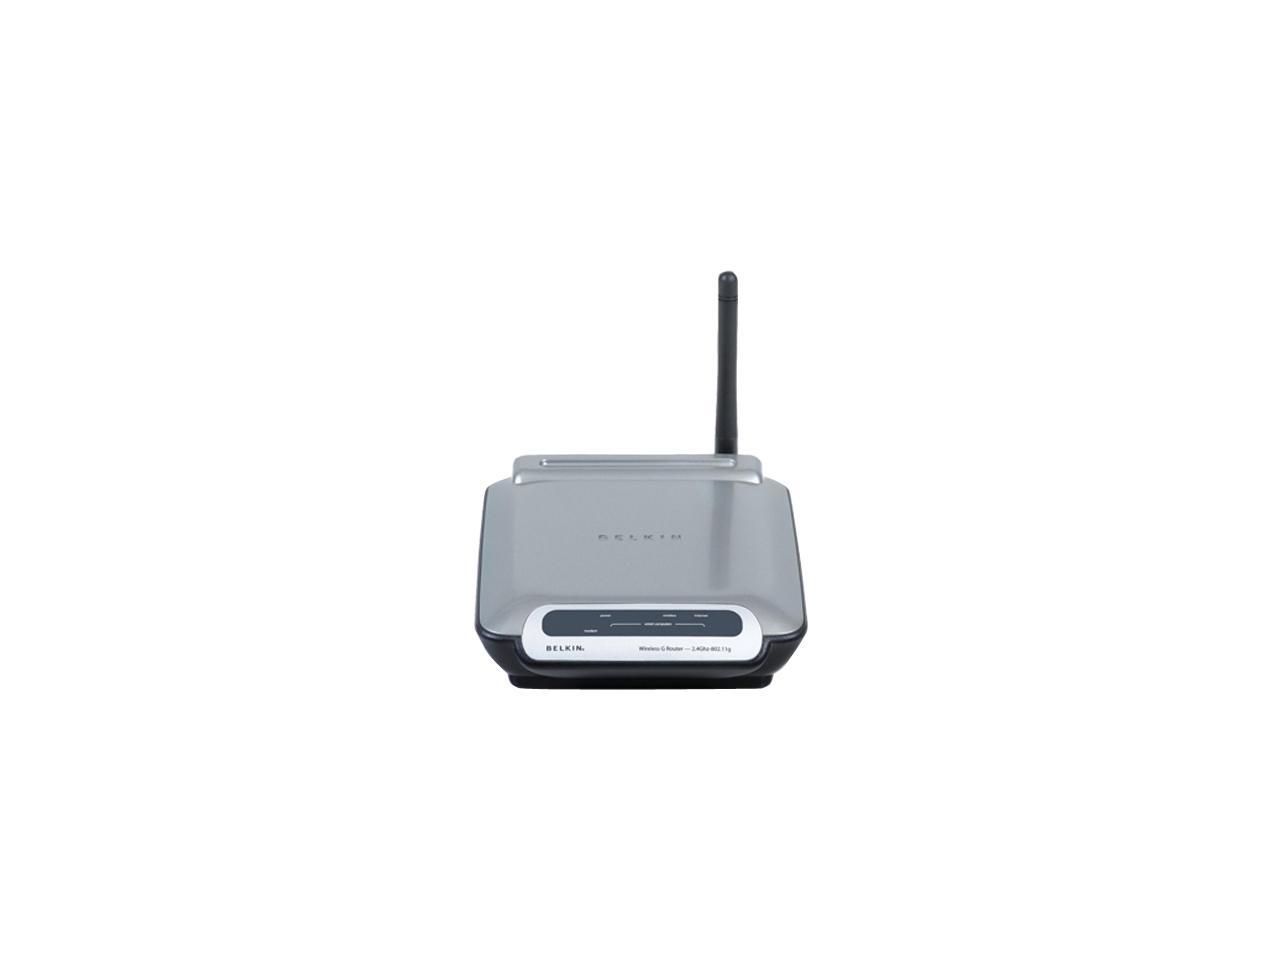 belkin wireless g router f5d7230 4 driver download